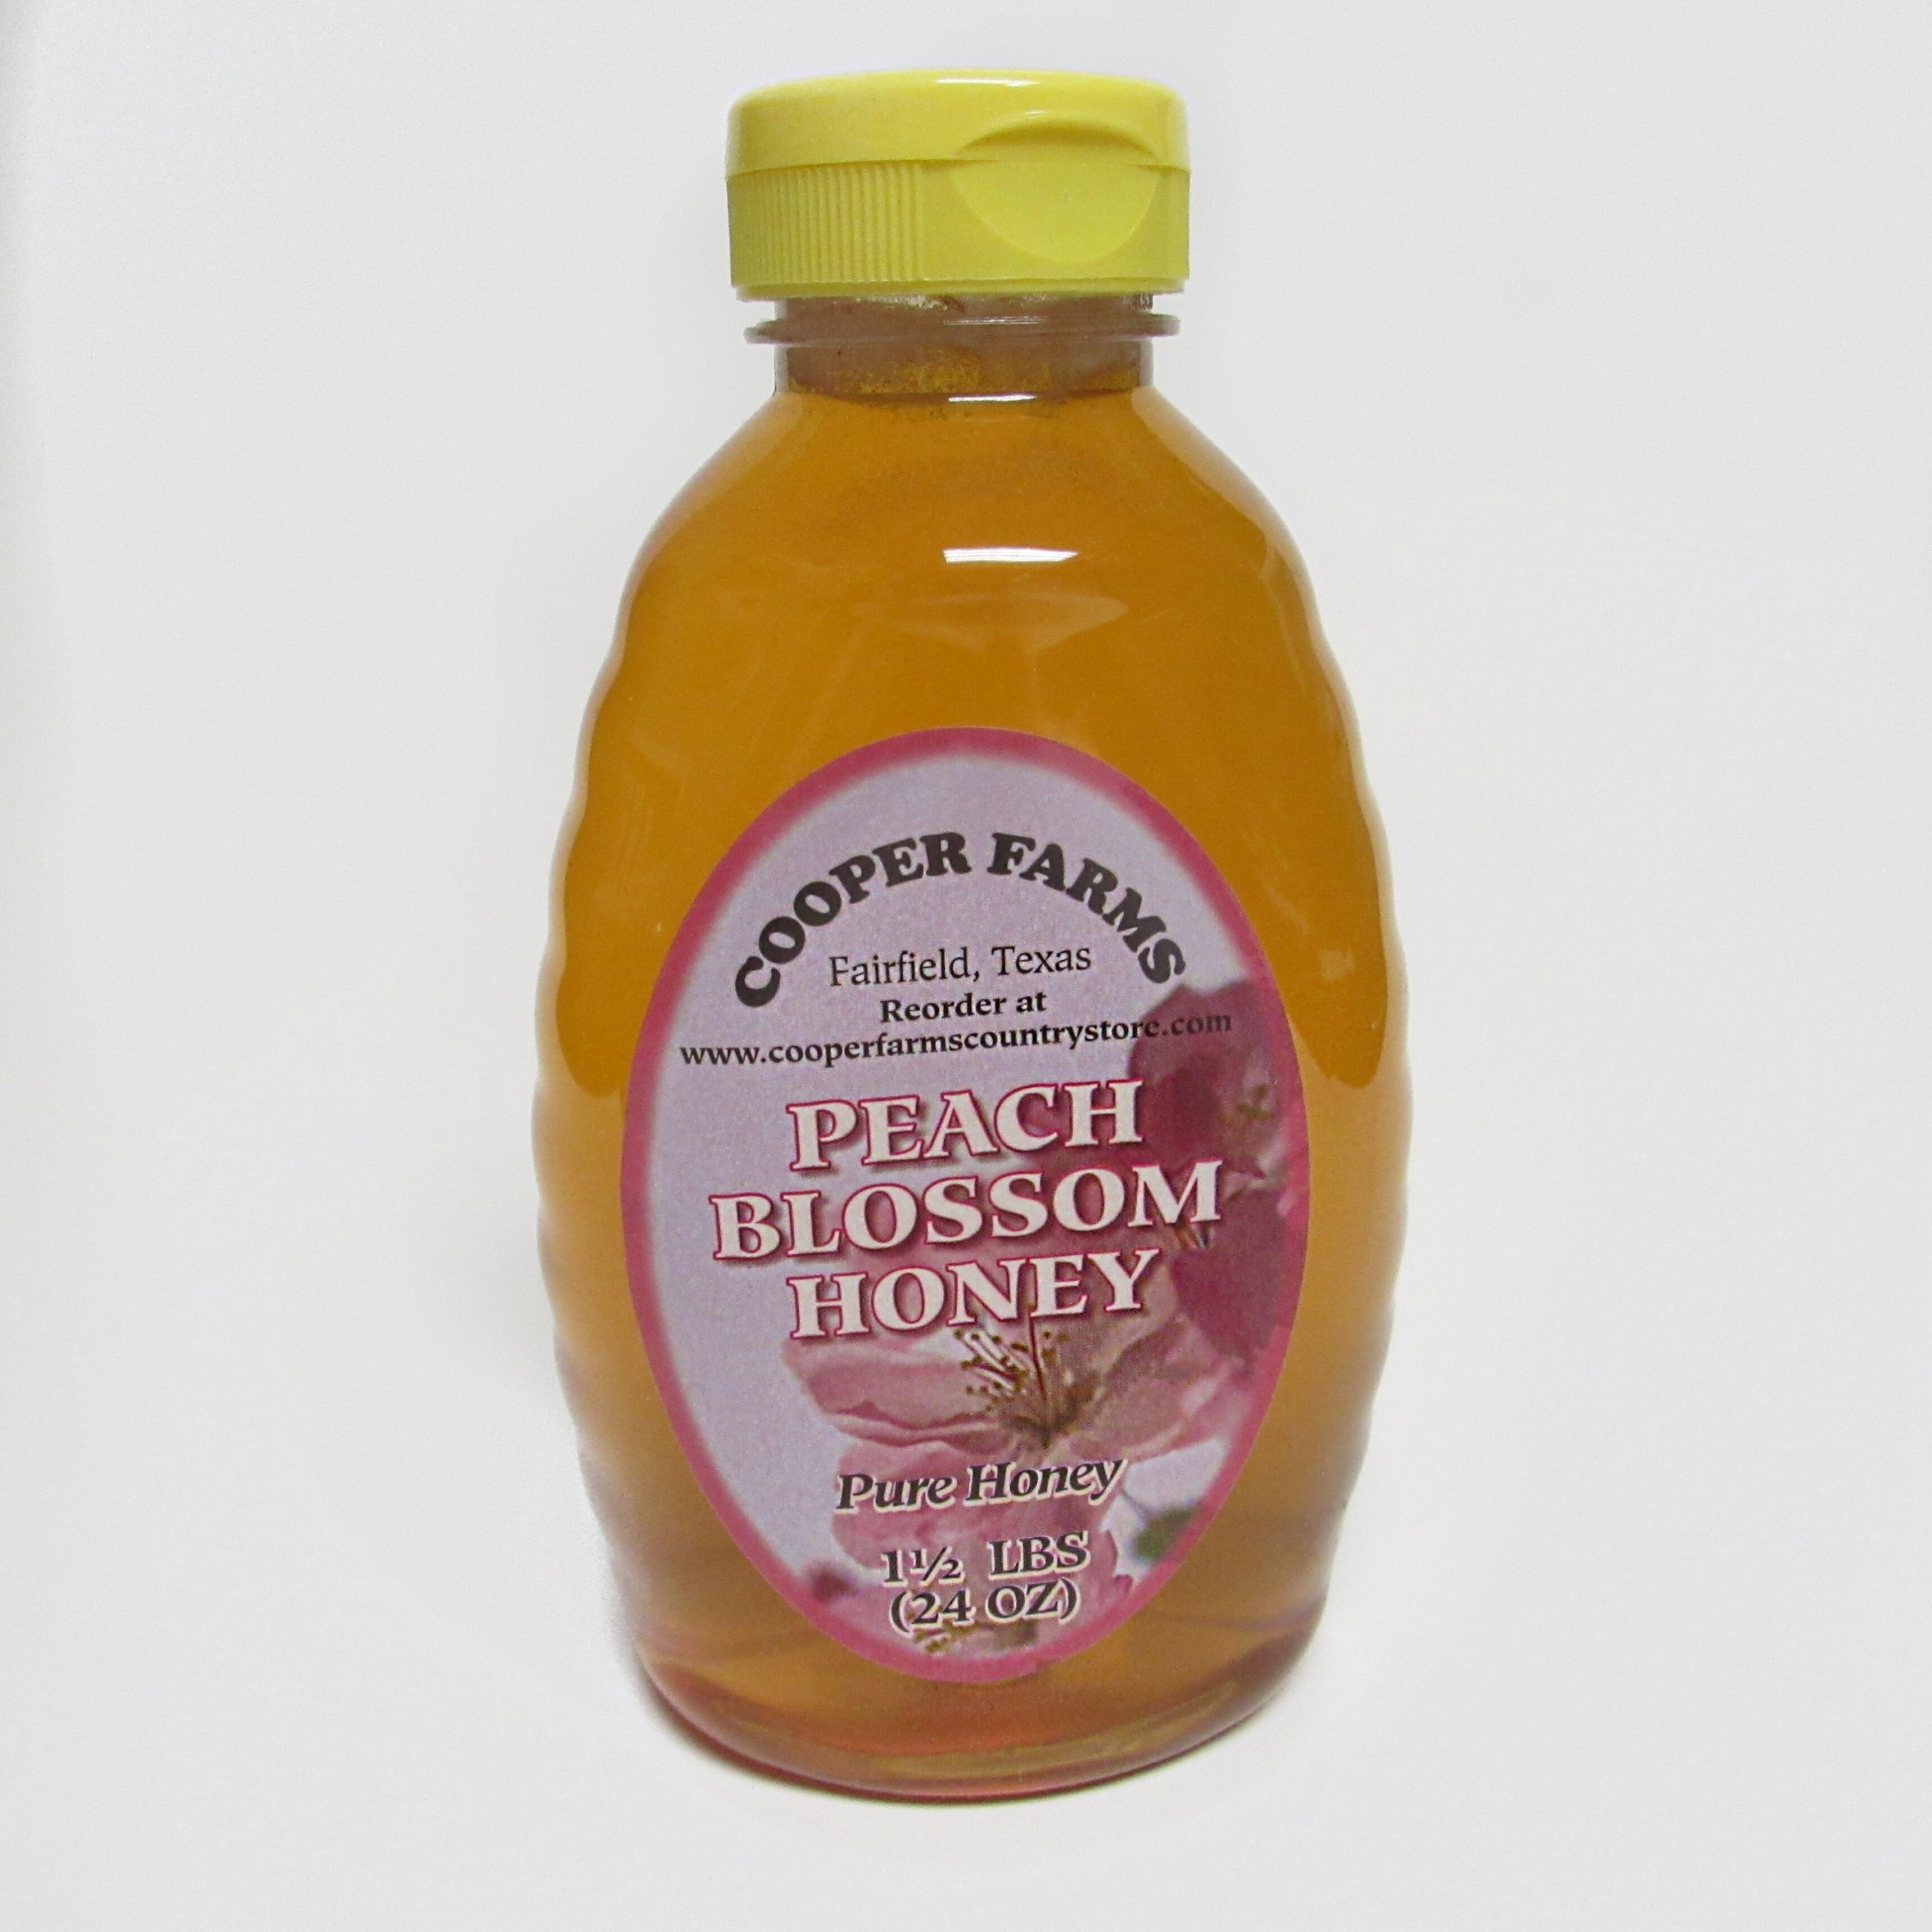 Nectarine blossom honey. Honey Blossom. Orange Blossom Honey hand & Cuticle Salve. Honey Blossom photo.